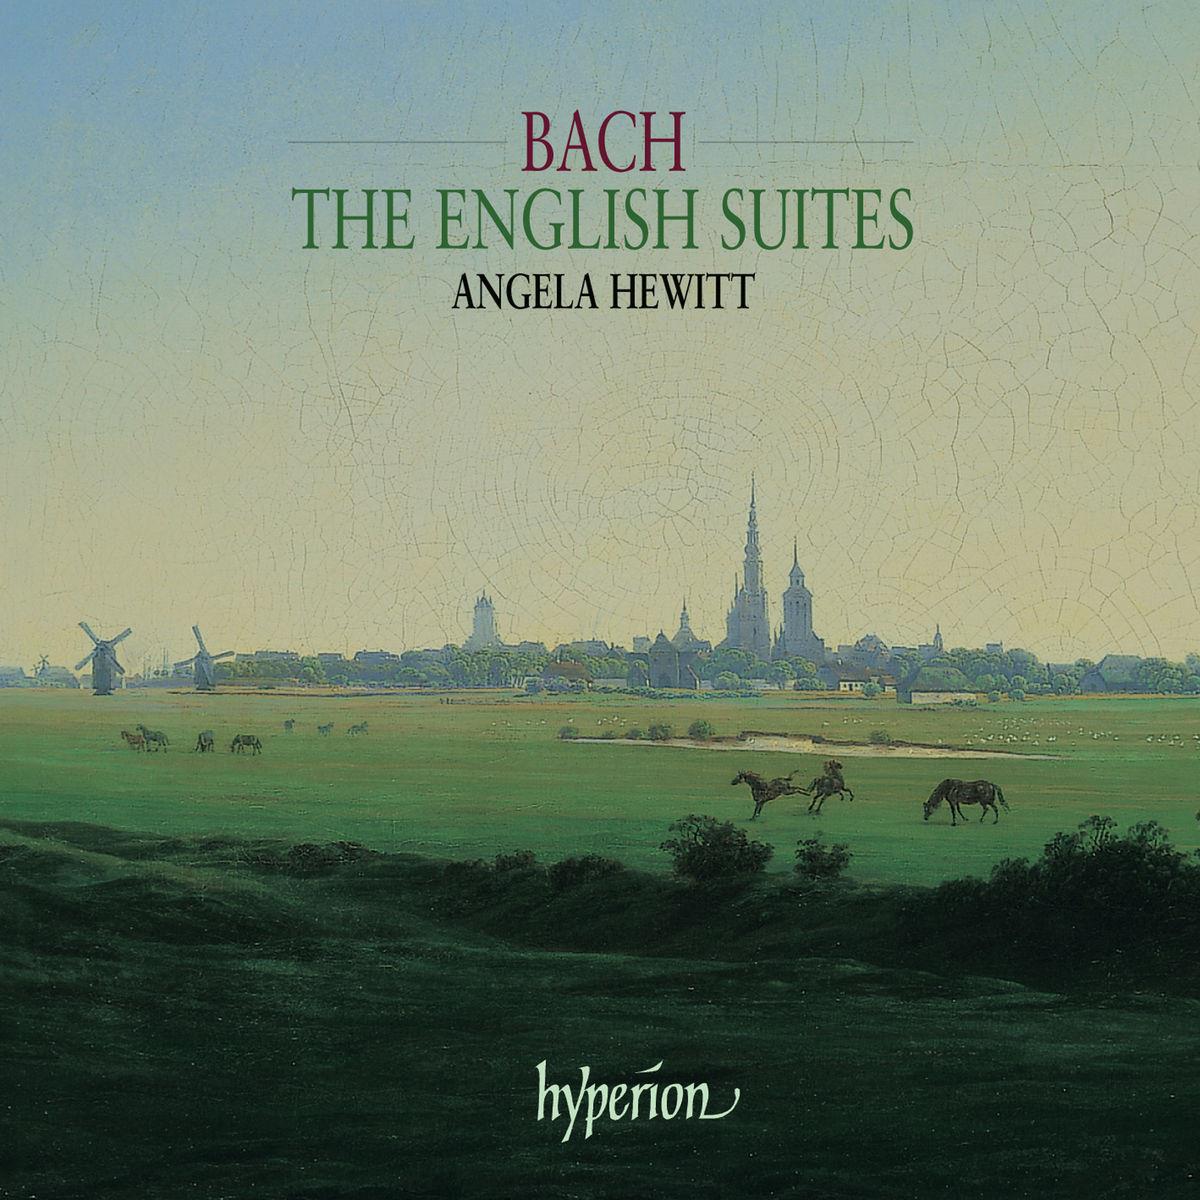 English Suite No. 4 in F major BWV809 - Prelude